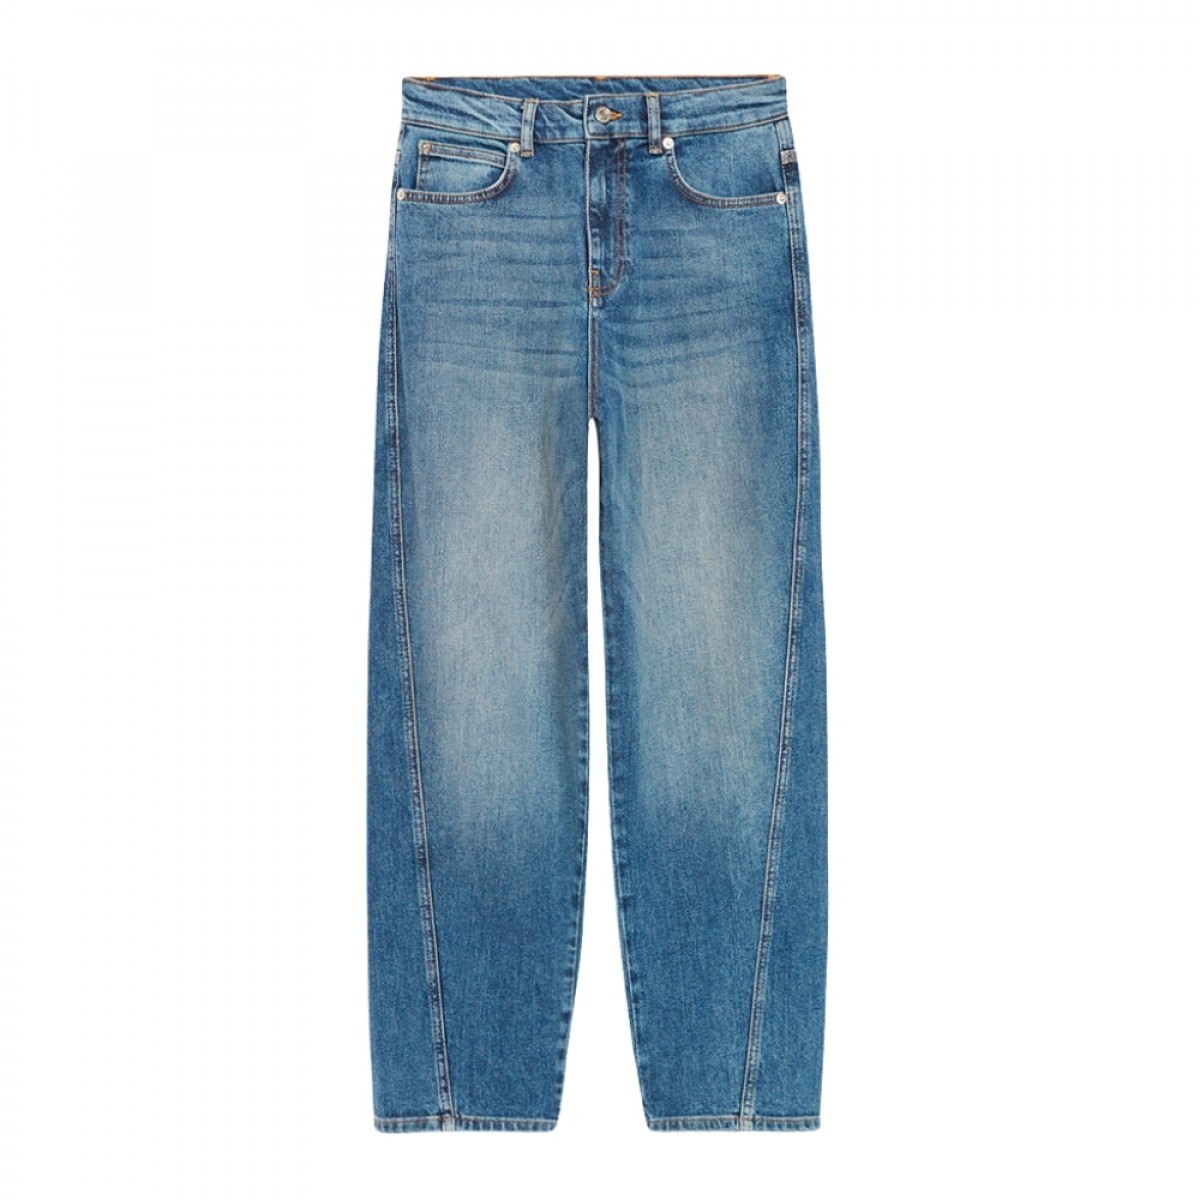 caleb jeans - denim blue - front